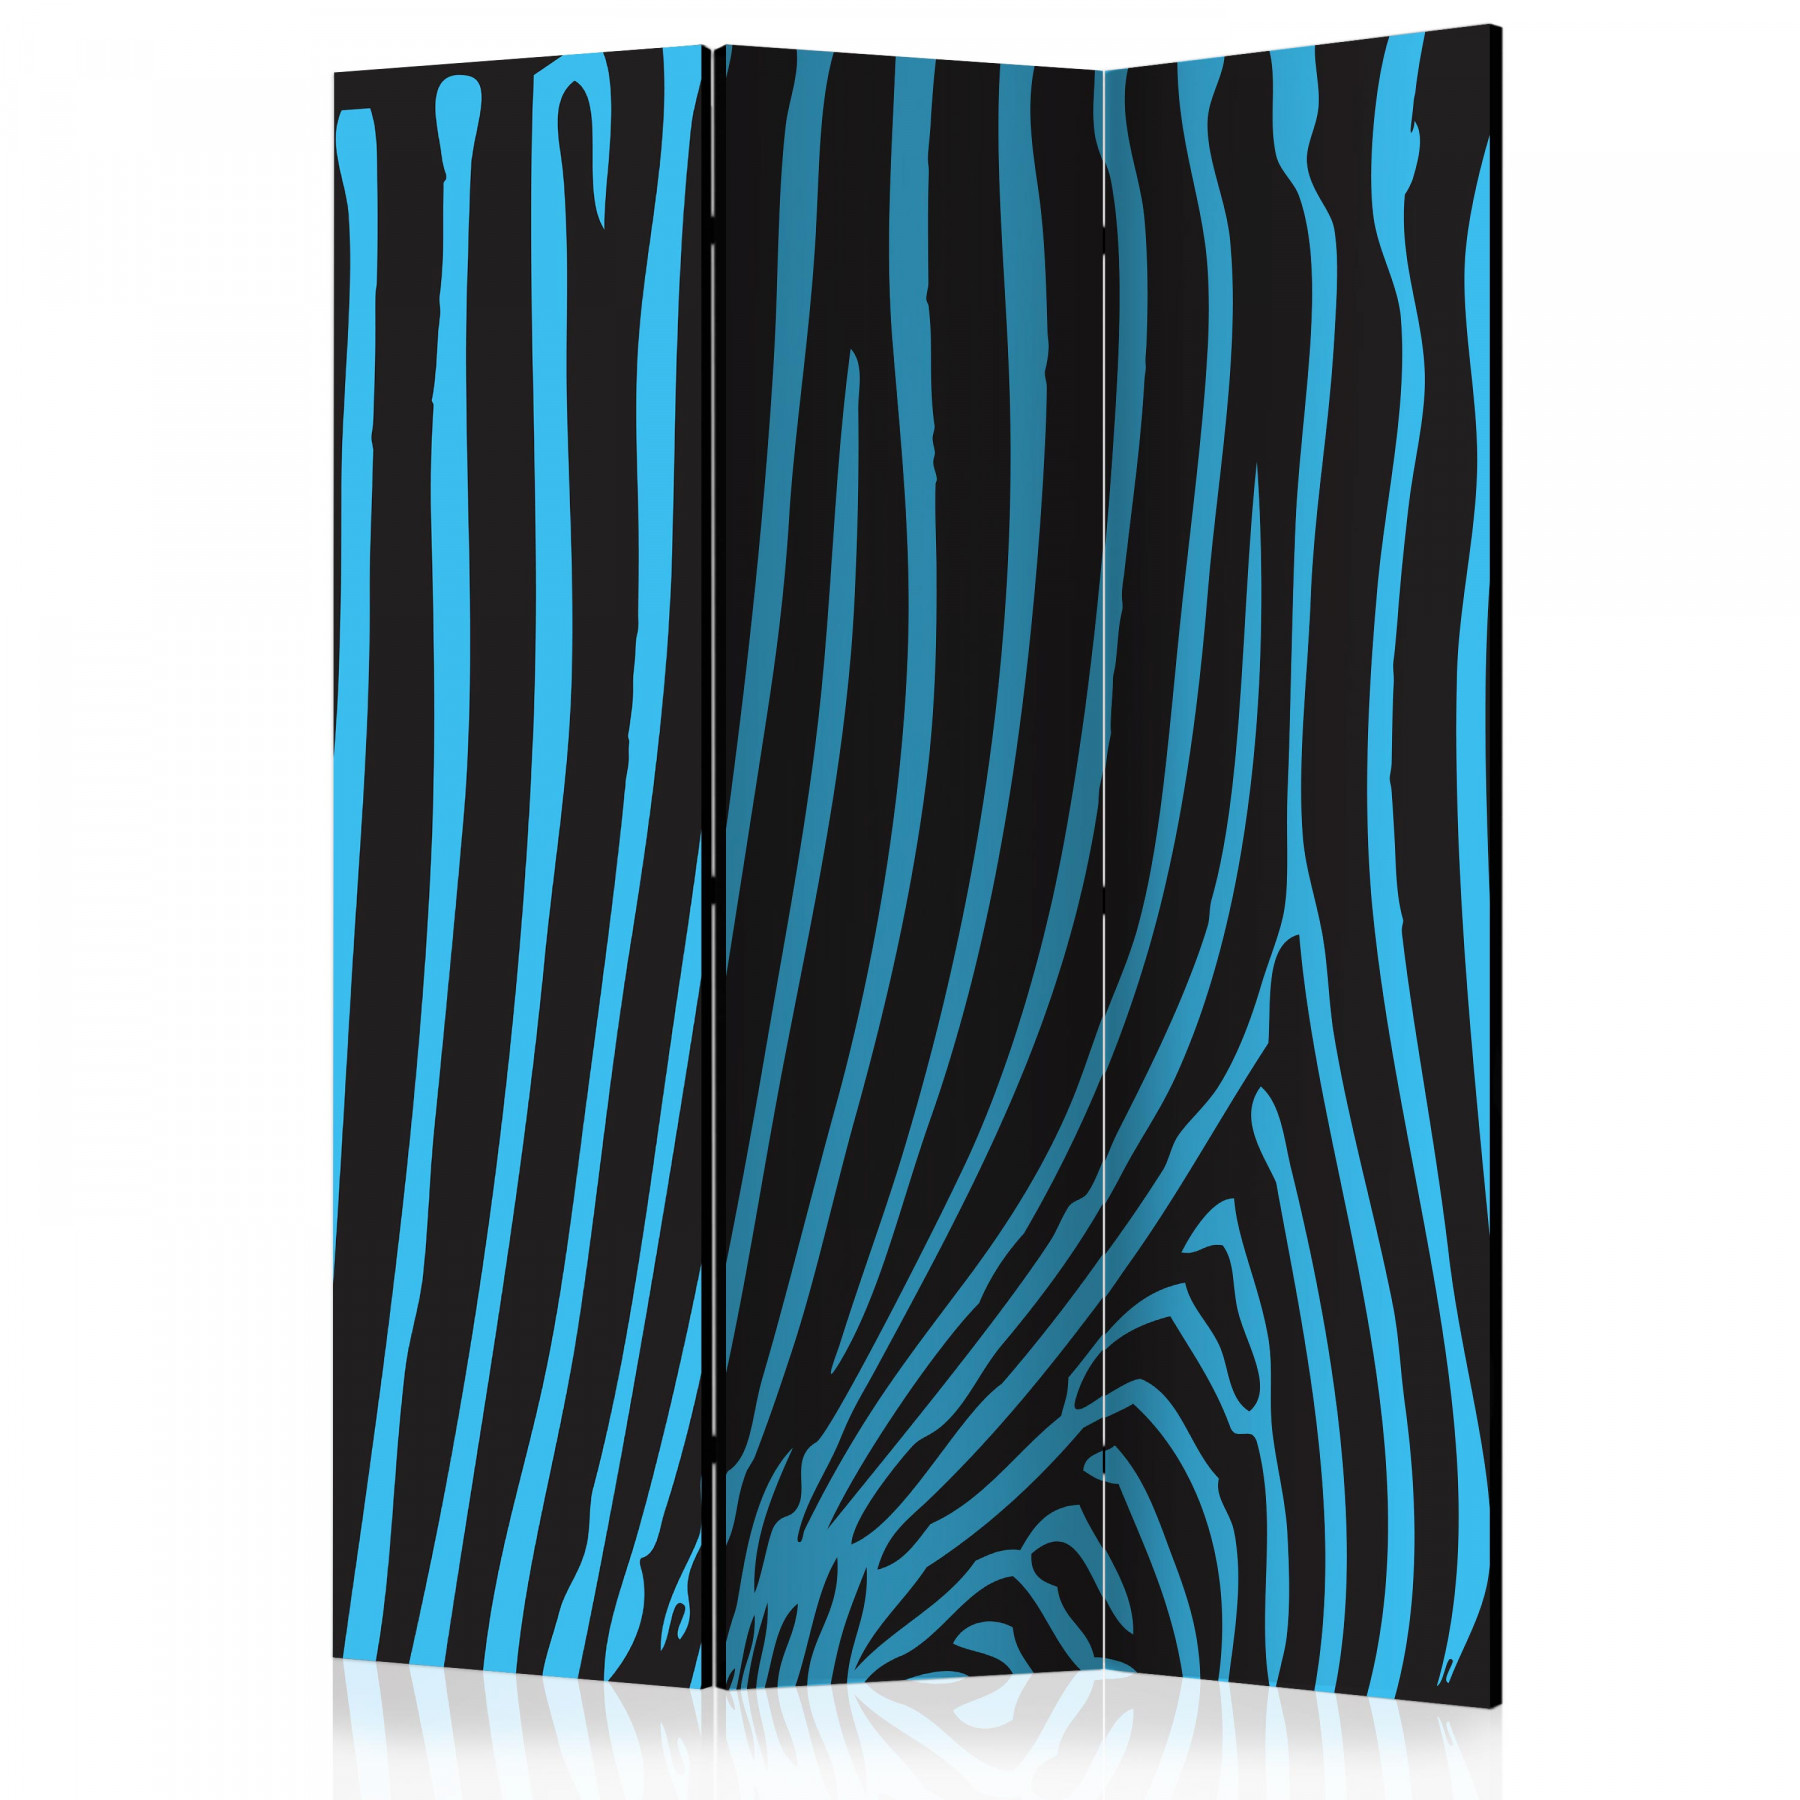 Akusztikus paraván - Zebra pattern (turquoise) [Room Dividers]